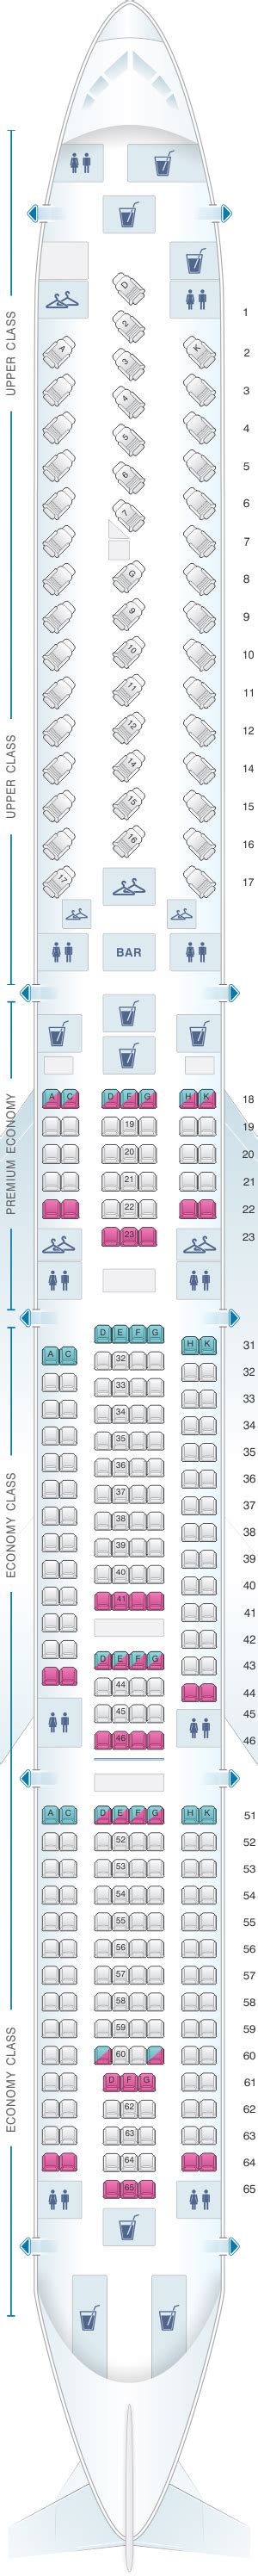 Airbus A330 300 Seating Chart Virgin Atlantic Elcho Table